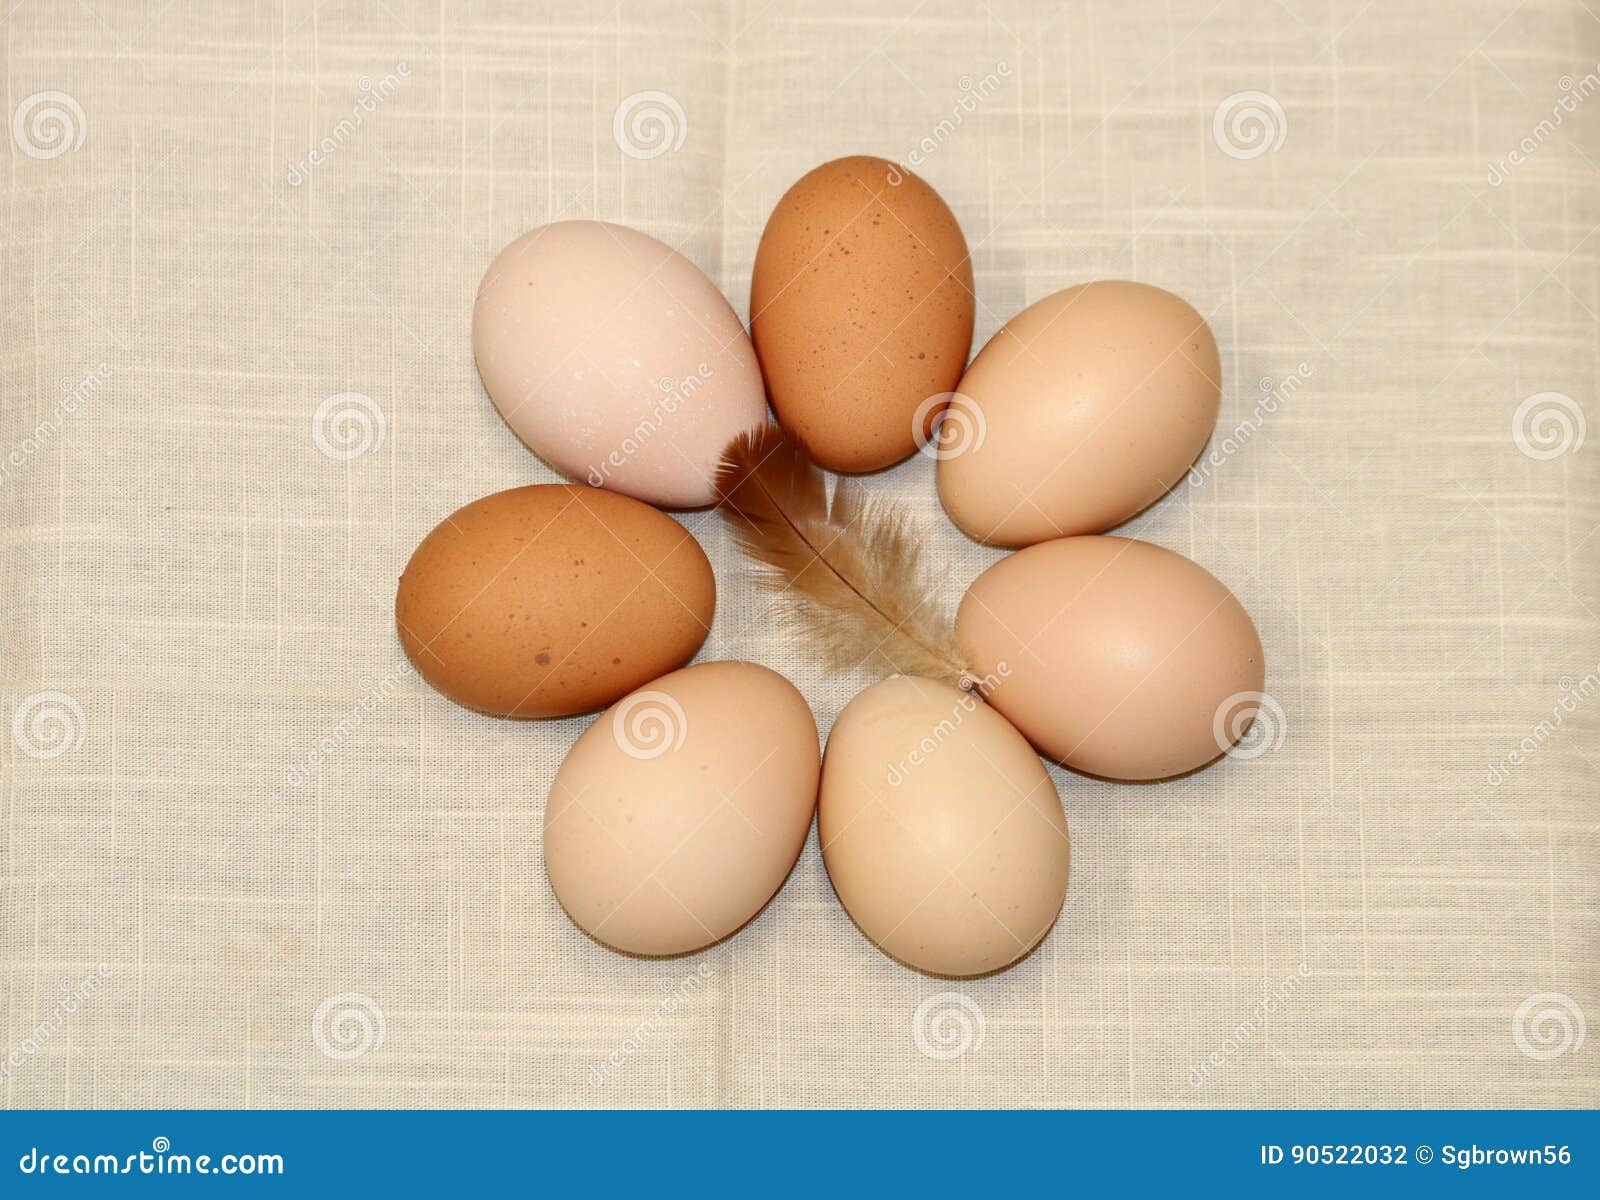 Farm Fresh Chicken Eggs Near Me See More on | SilentTool ...